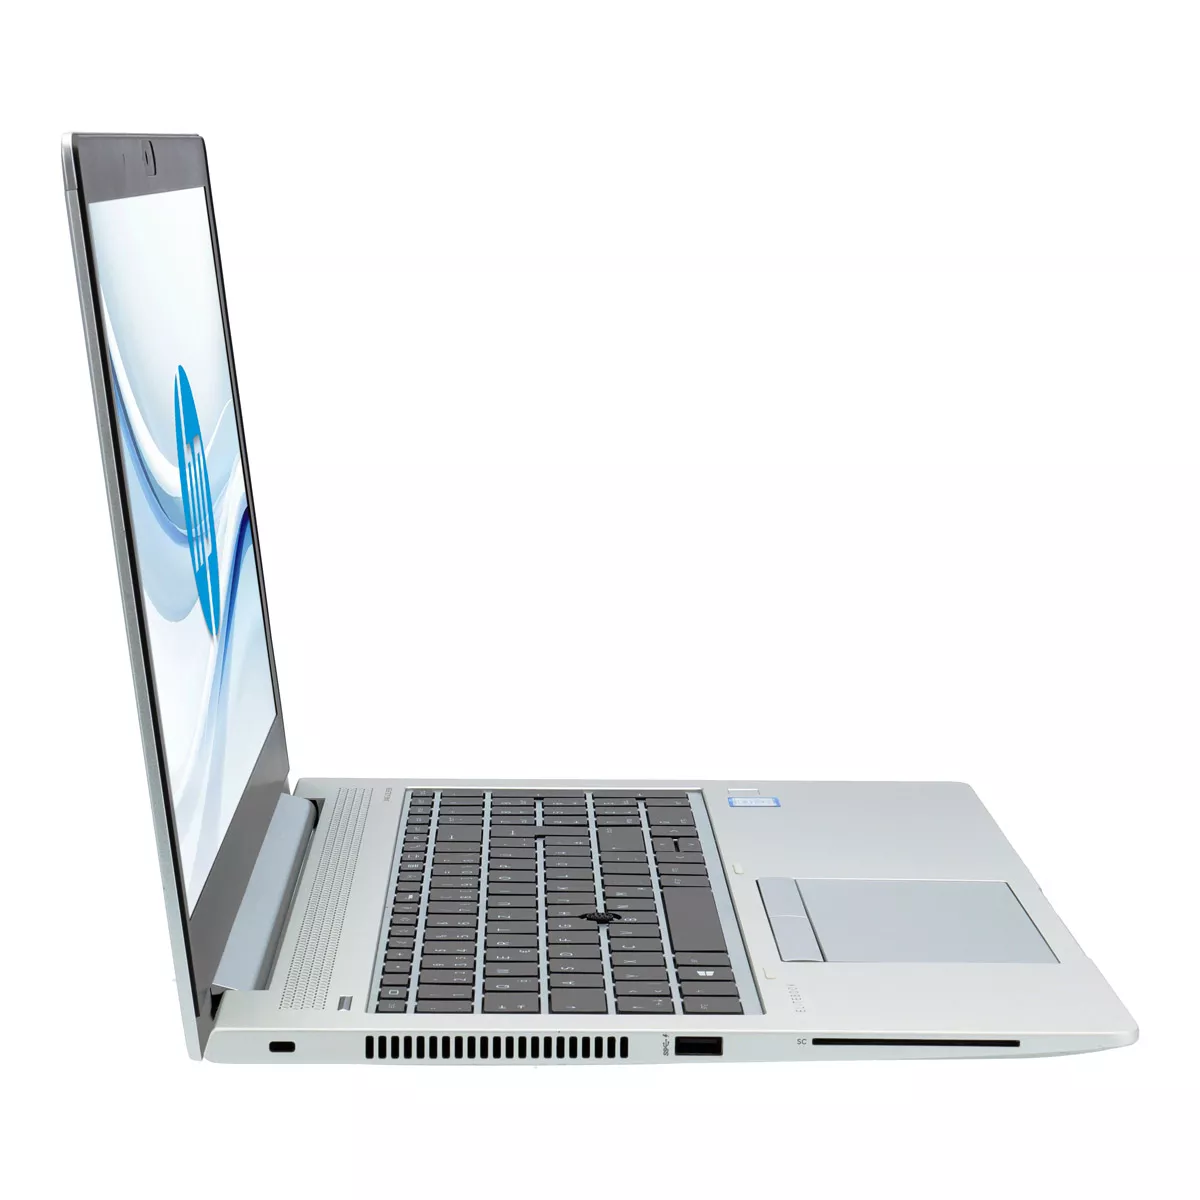 HP EliteBook 850 G5 Core i5 8250U Full-HD Touch 16 GB DDR4 240 GB M.2 nVME SSD Webcam B